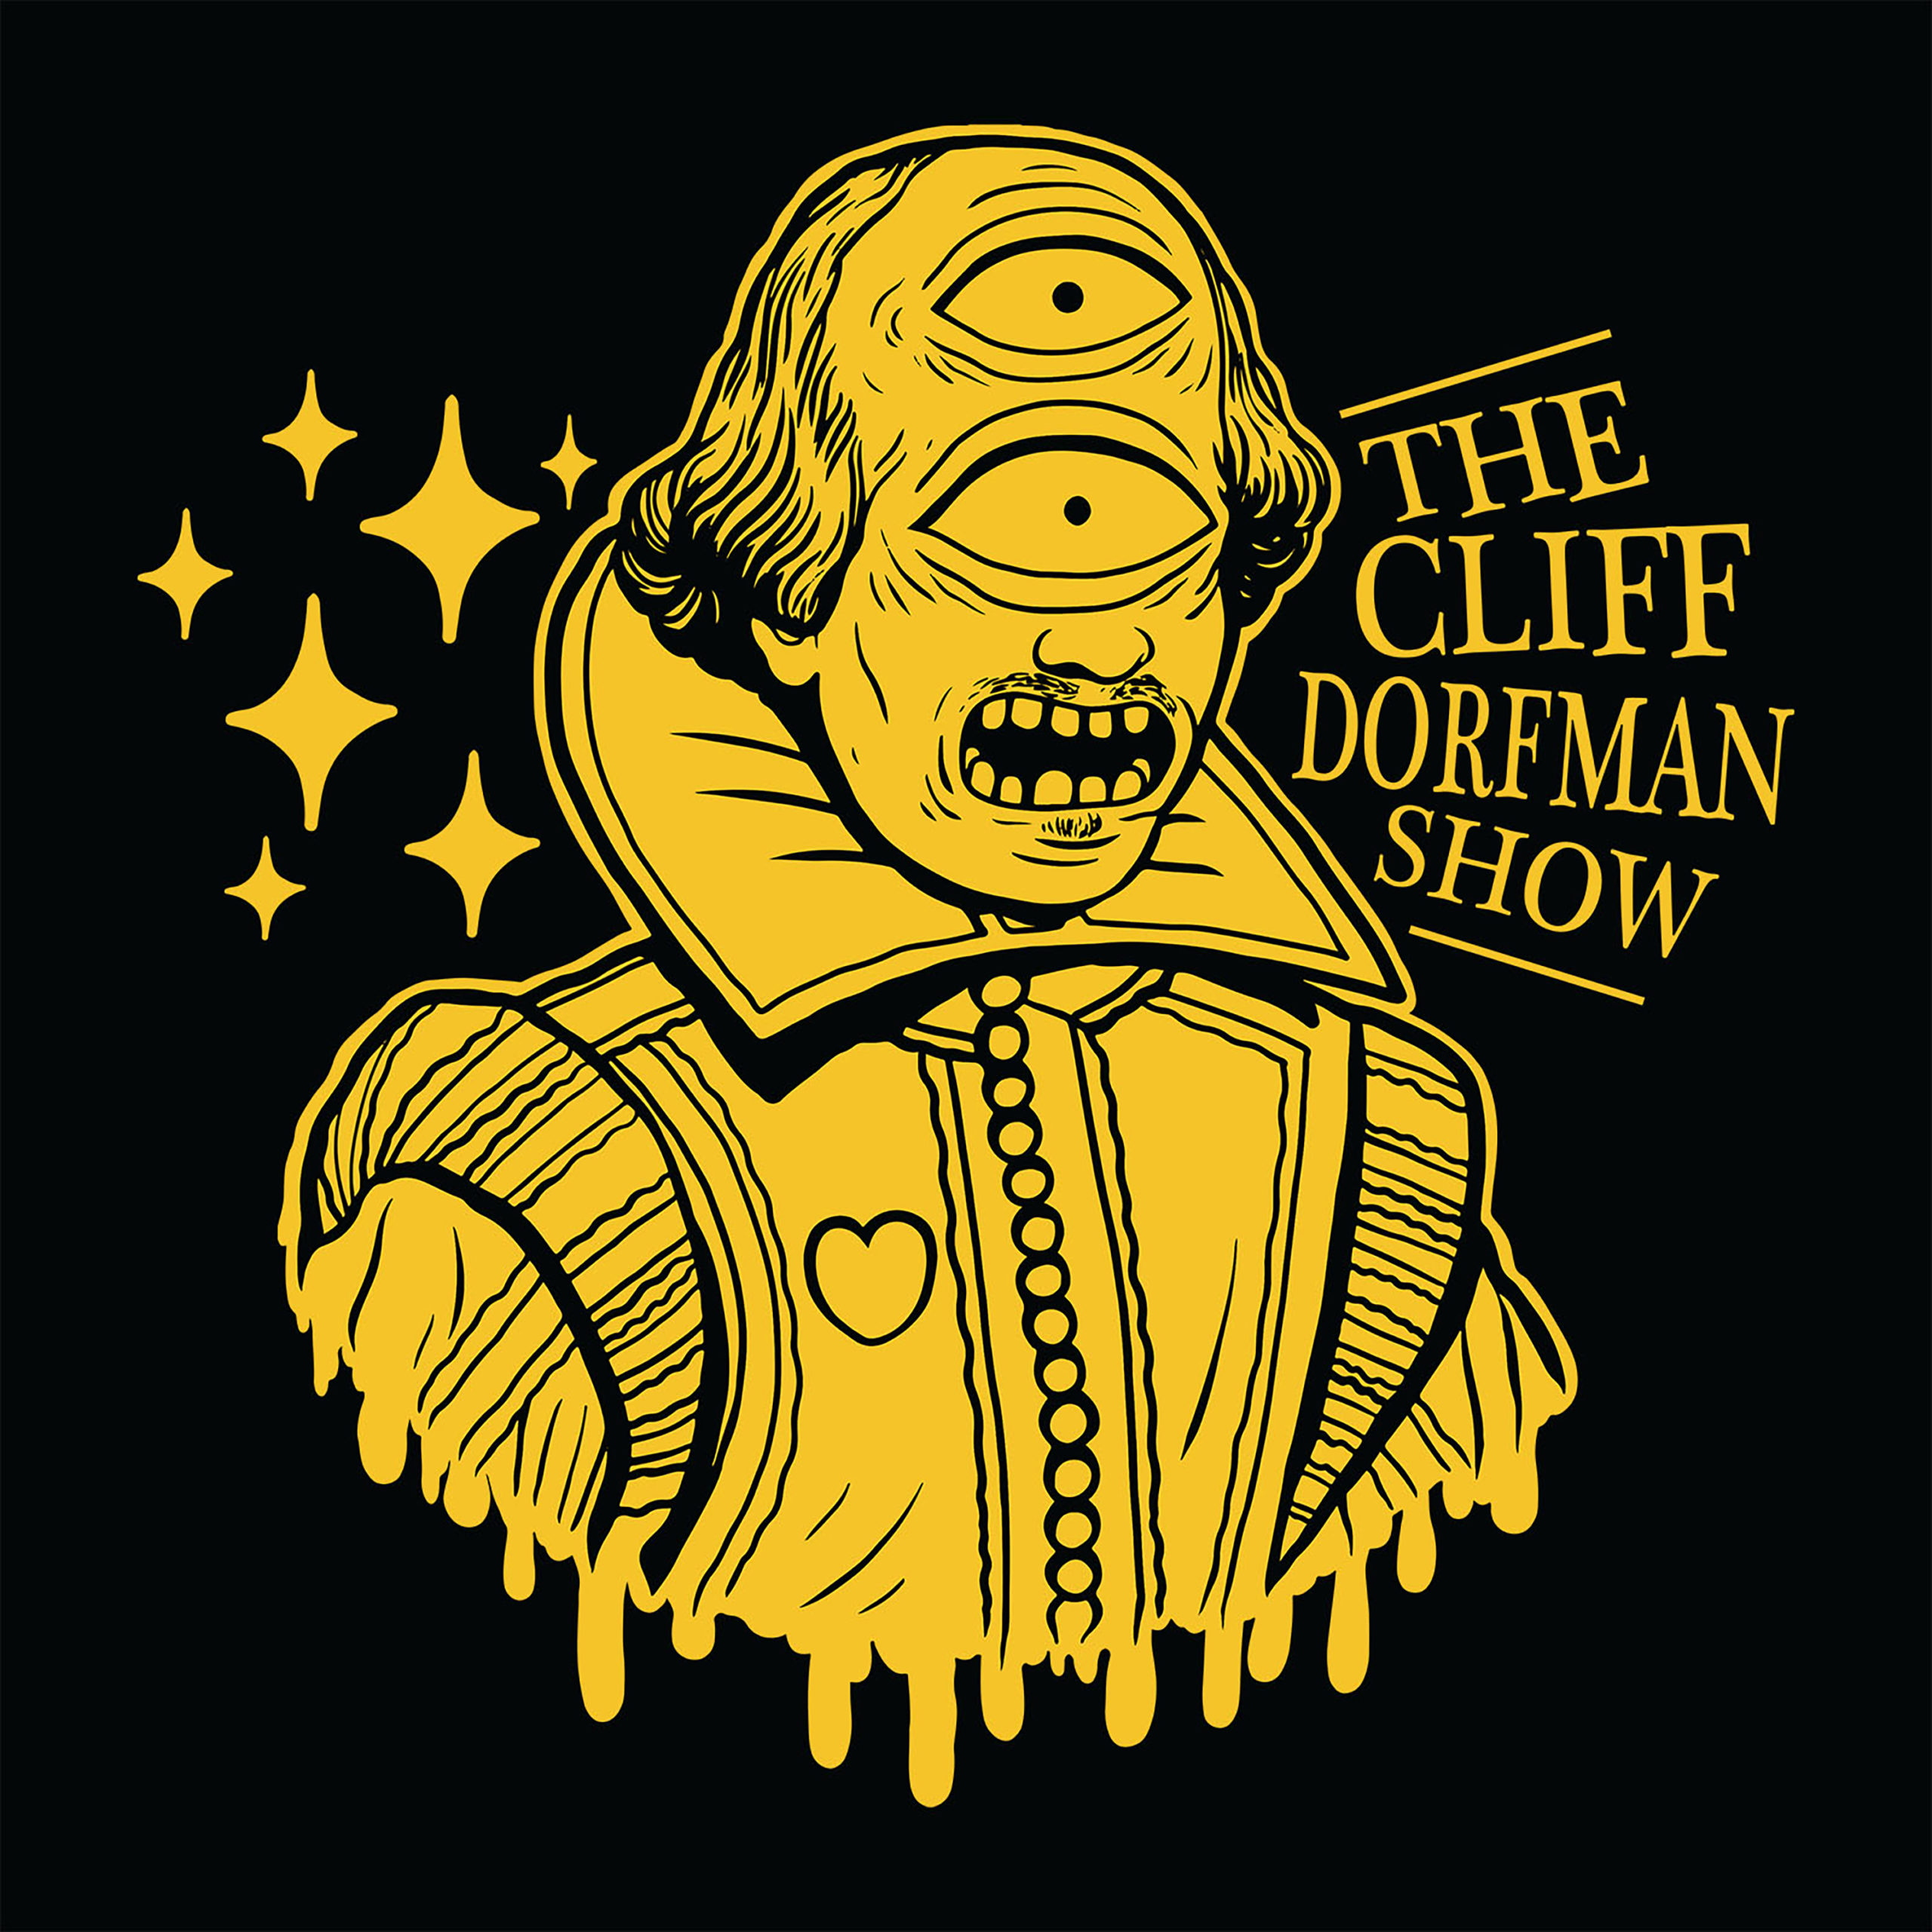 The Cliff Dorfman Show